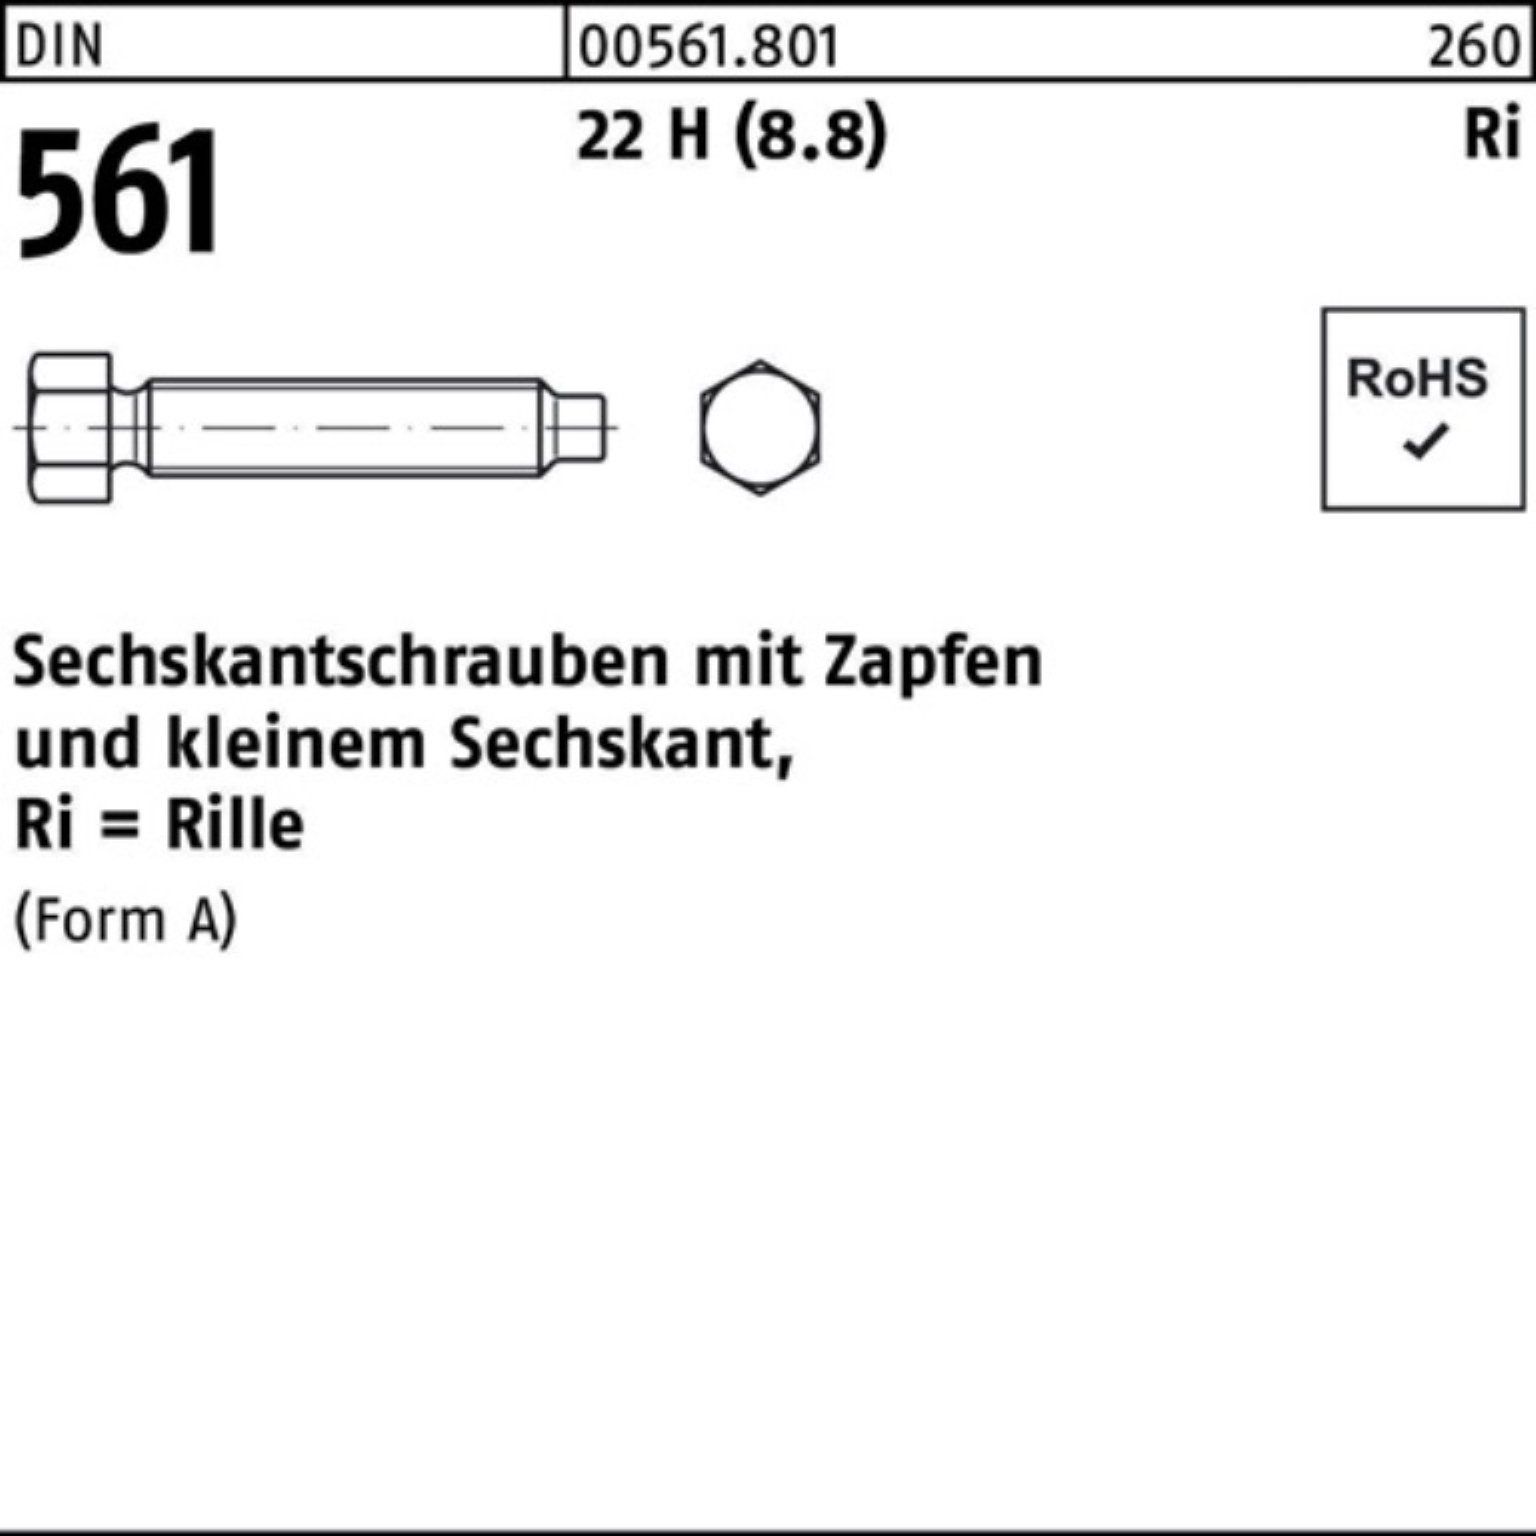 Reyher Sechskantschraube 100er Pack Sechskantschraube DIN 561 Zapfen AM 20x 60 22 H (8.8) 10 St